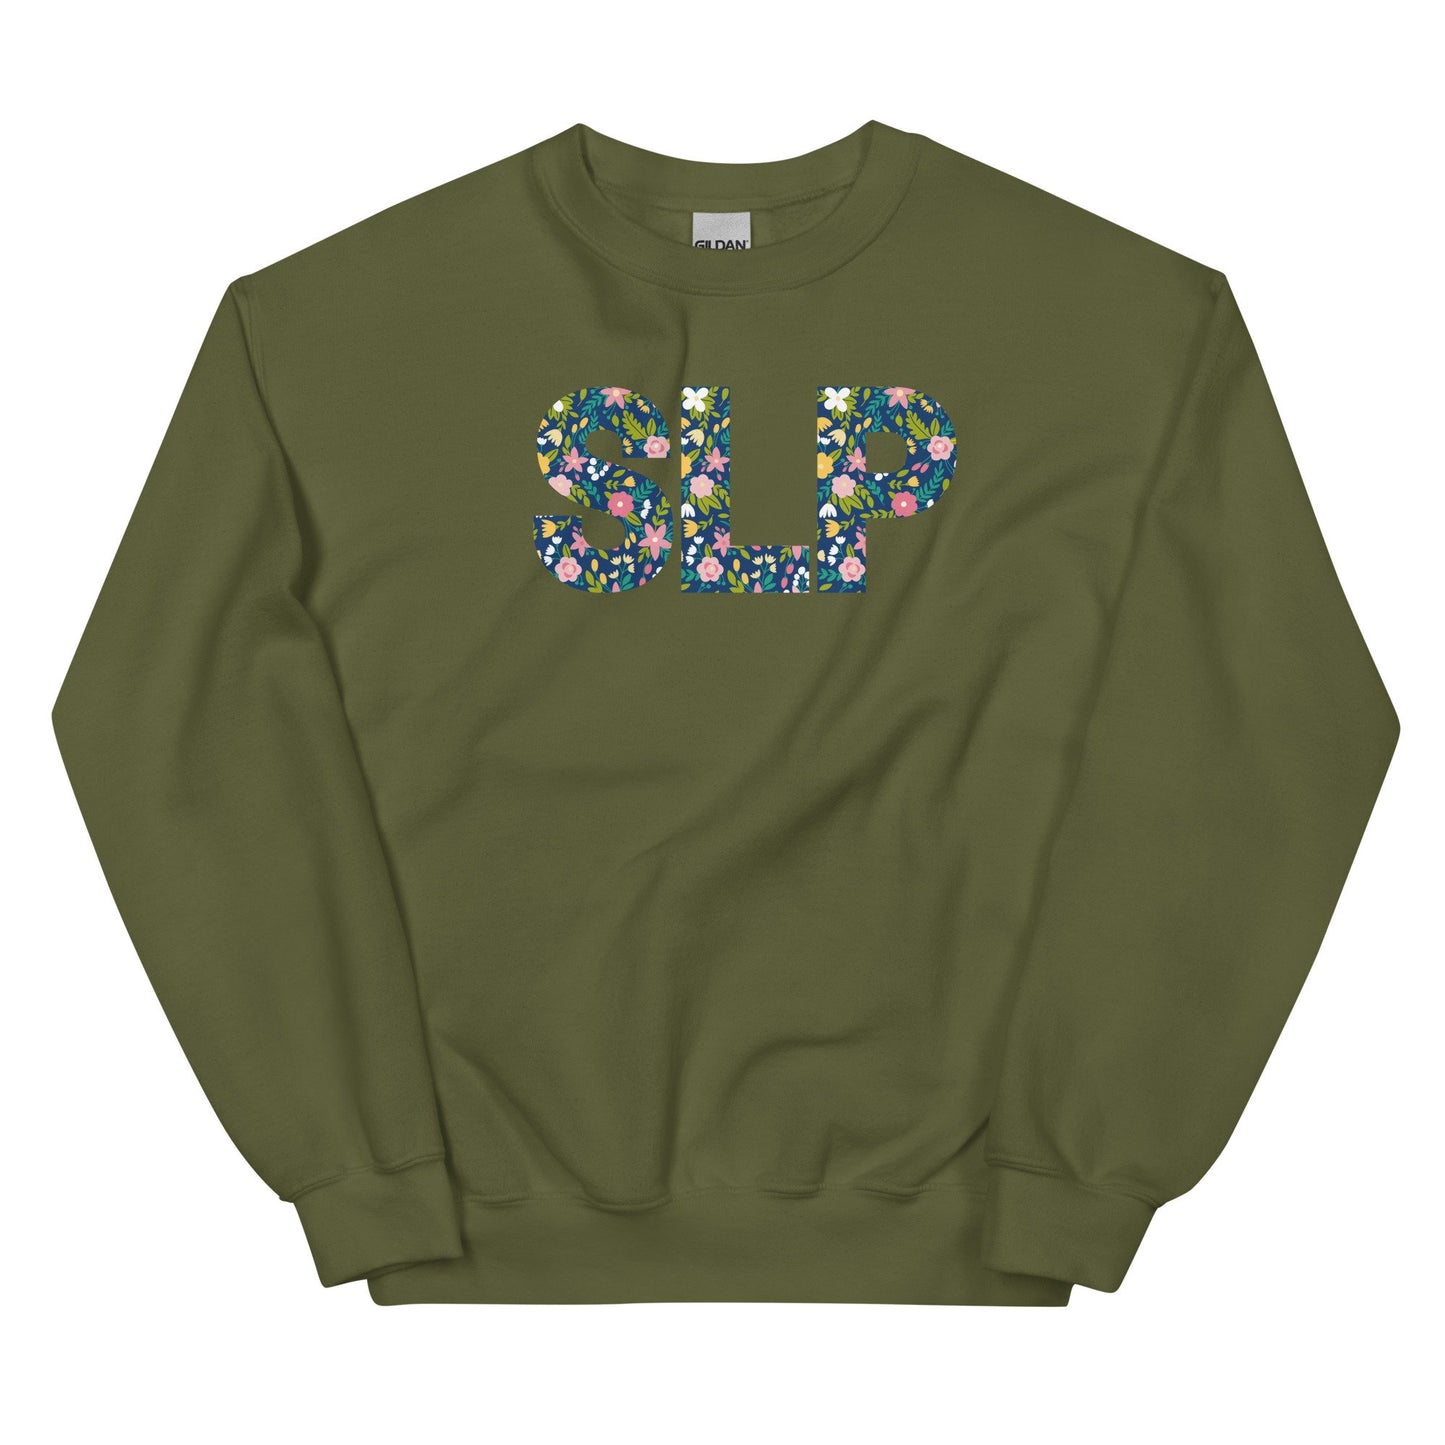 unisex-crew-neck-sweatshirt-military-green-front-63084c217e7e4.jpg